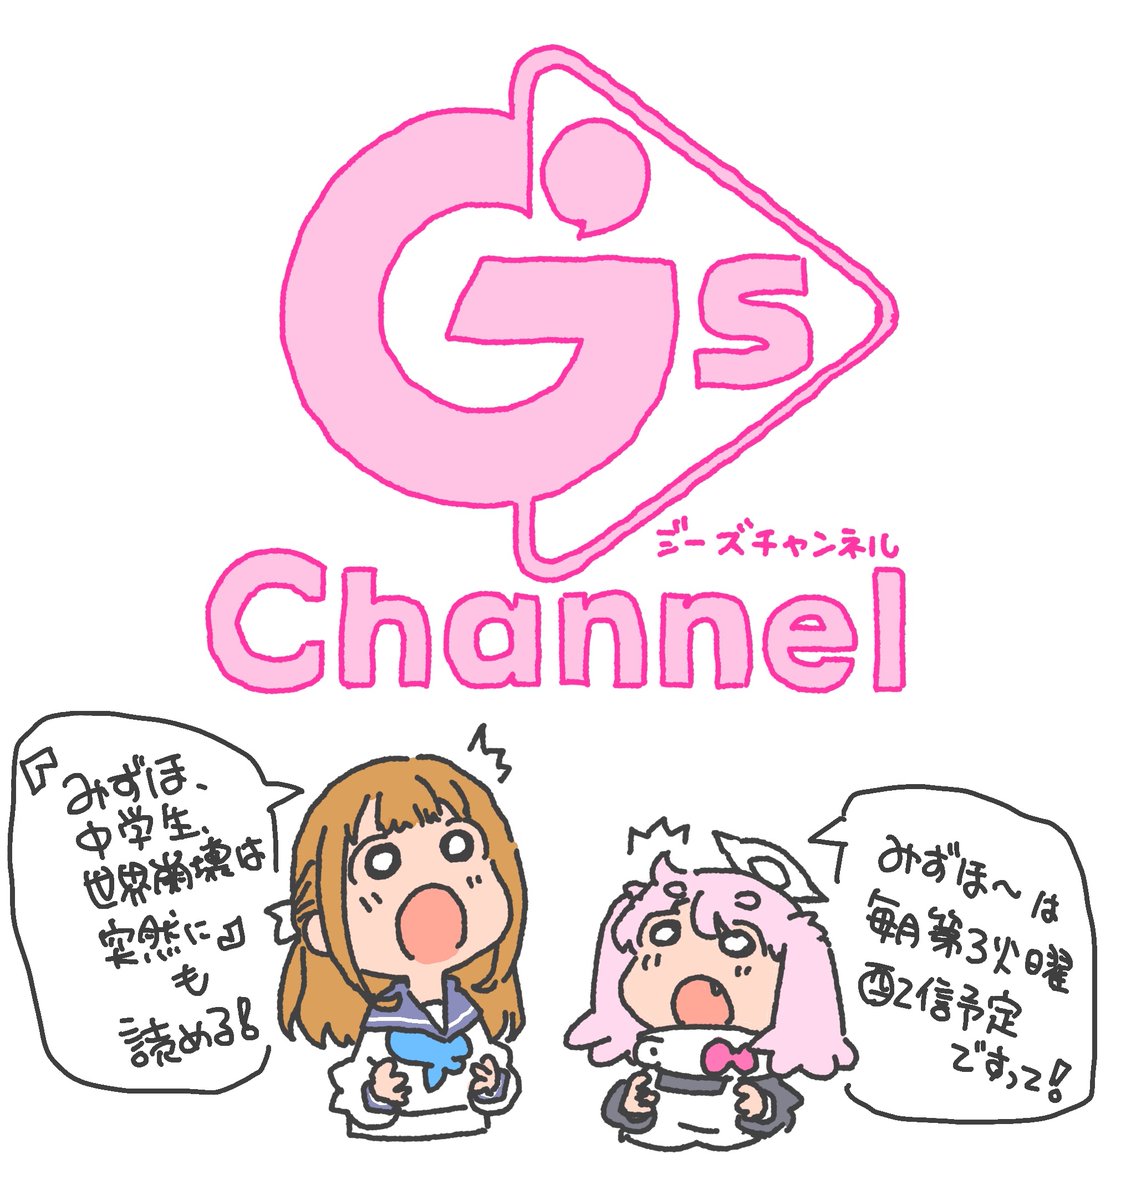 KADOKAWAさんの新しいWEBサービス『G'sチャンネル』が先日始まったそうです。
連載作『みずほ、中学生、世界崩壊は突然に』も、そこで配信されて読めるそうですよ!
https://t.co/H6VBlXTomR 